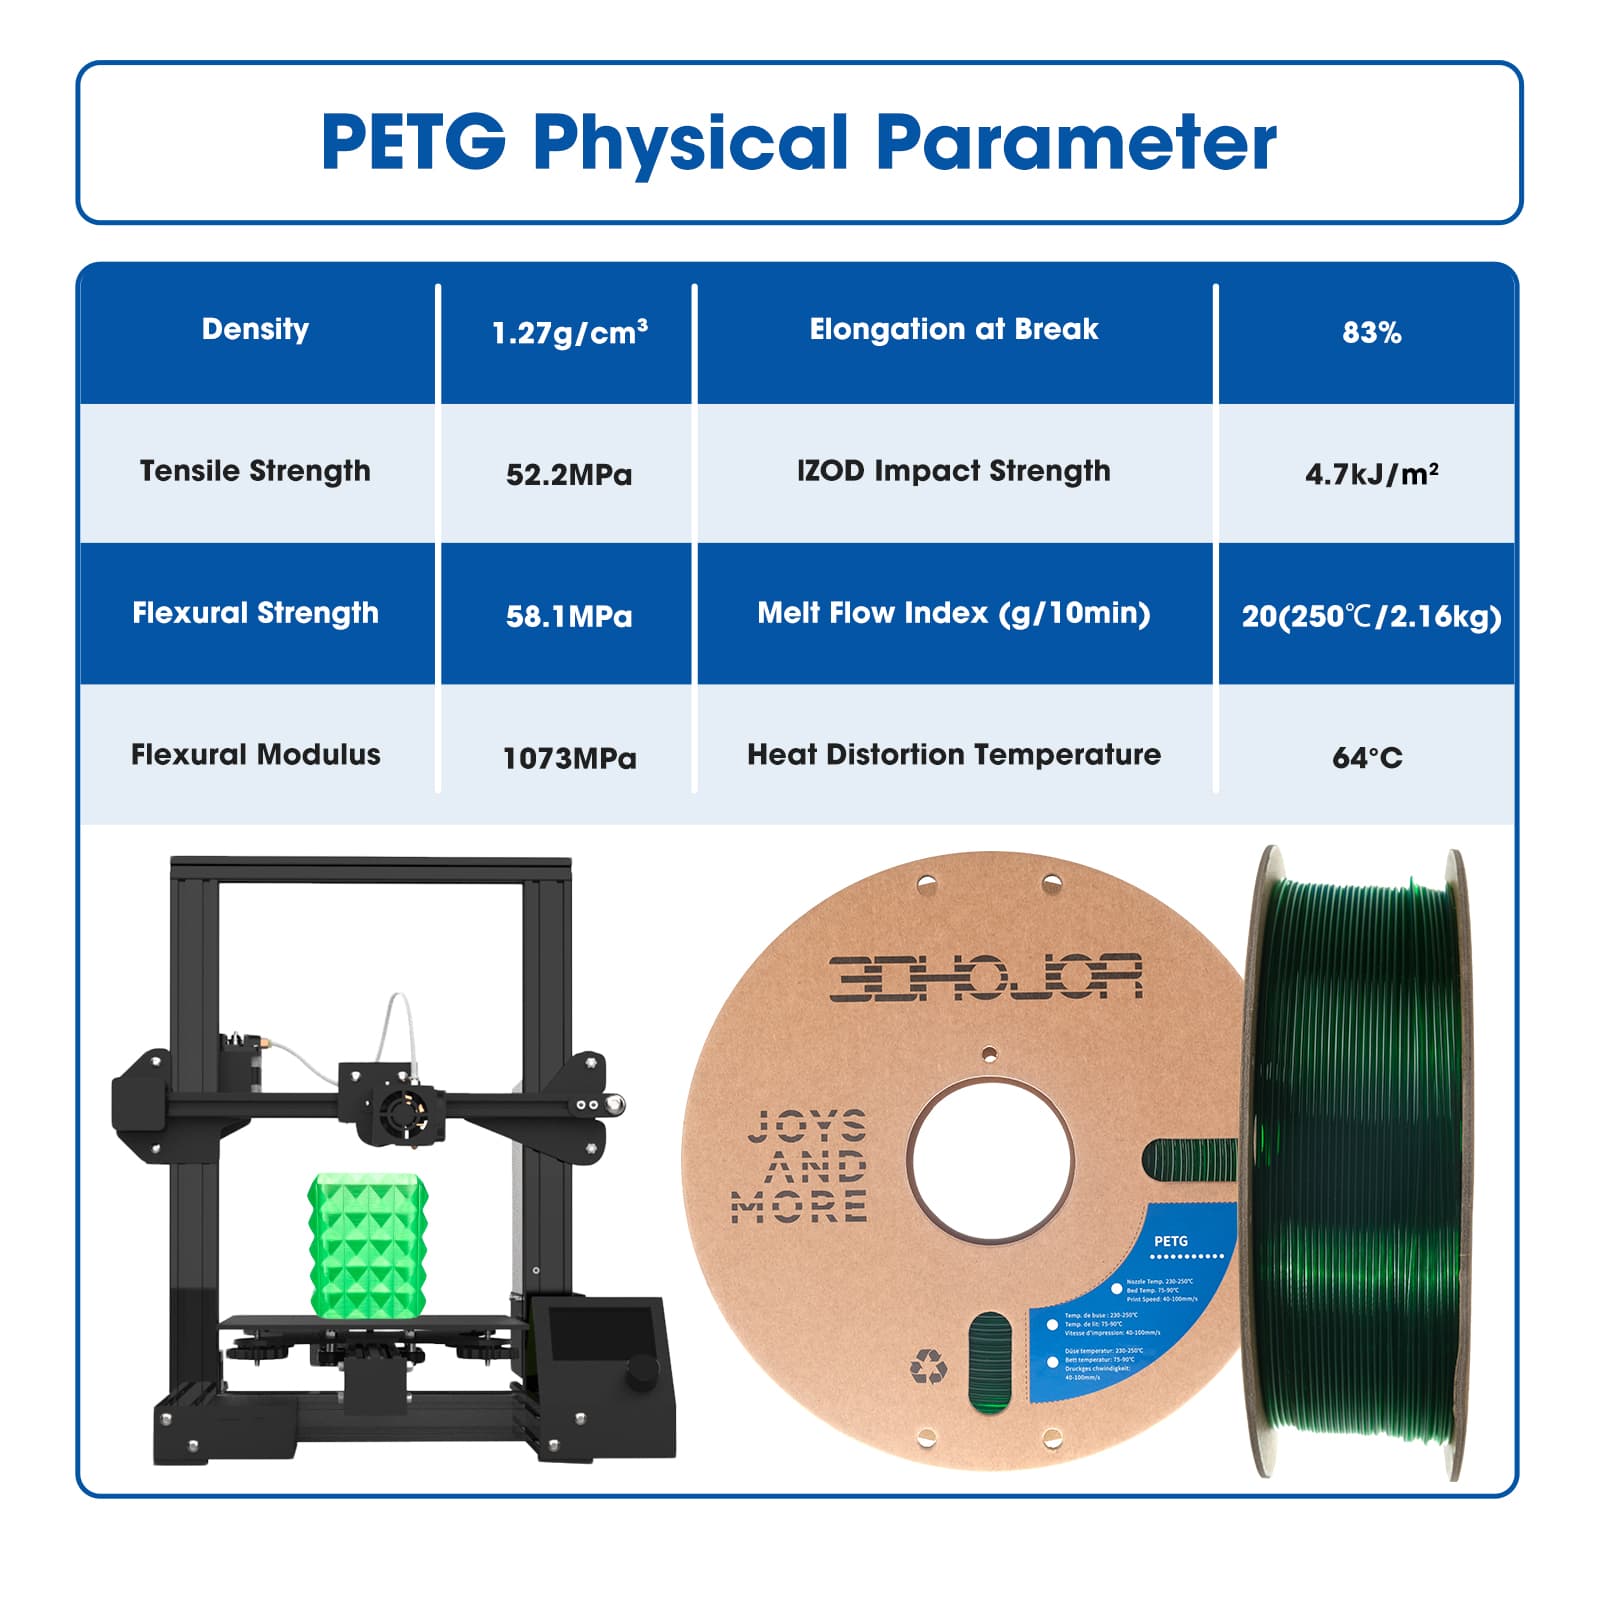 3DHoJor PETG Filament 1.75mm, PETG 3D Printing Filament, 2.2 LBS (1KG) Cardboard Spool, Fit Most FDM 3D Printer, Green…